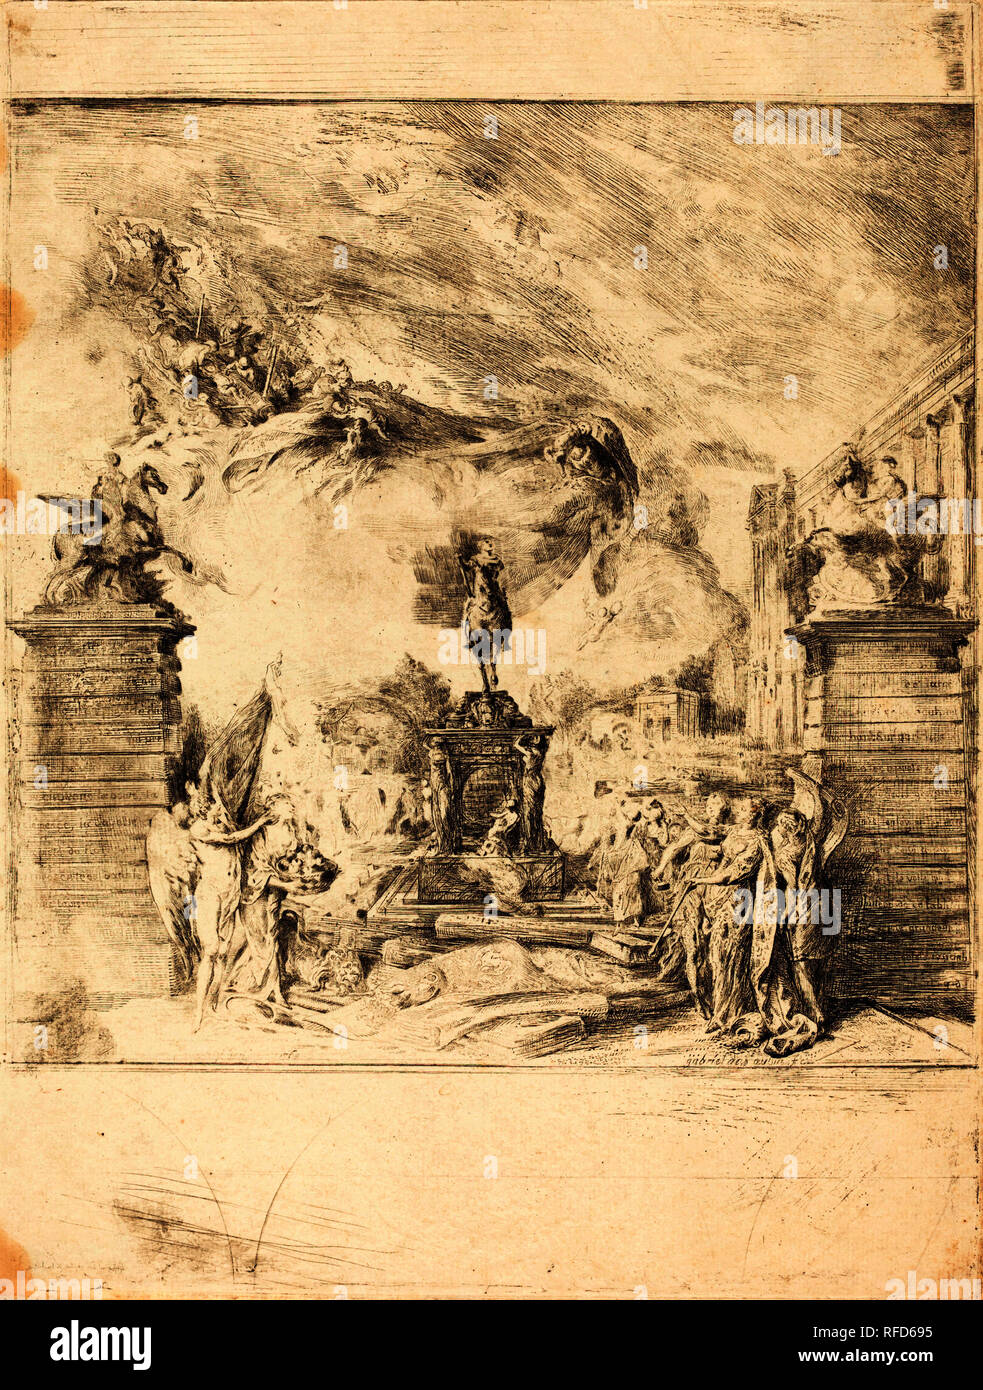 Allegorie sur l'Erection de la Statue de Louis XV (Allegory on the Establishment of a. Dated: c. 1763. Dimensions: image: 23.5 x 23.2 cm (9 1/4 x 9 1/8 in.)  plate: 31.6 x 24 cm (12 7/16 x 9 7/16 in.). Medium: etching with traces of roulette and engraving. Museum: National Gallery of Art, Washington DC. Author: Gabriel Jacques de Saint-Aubin. Stock Photo